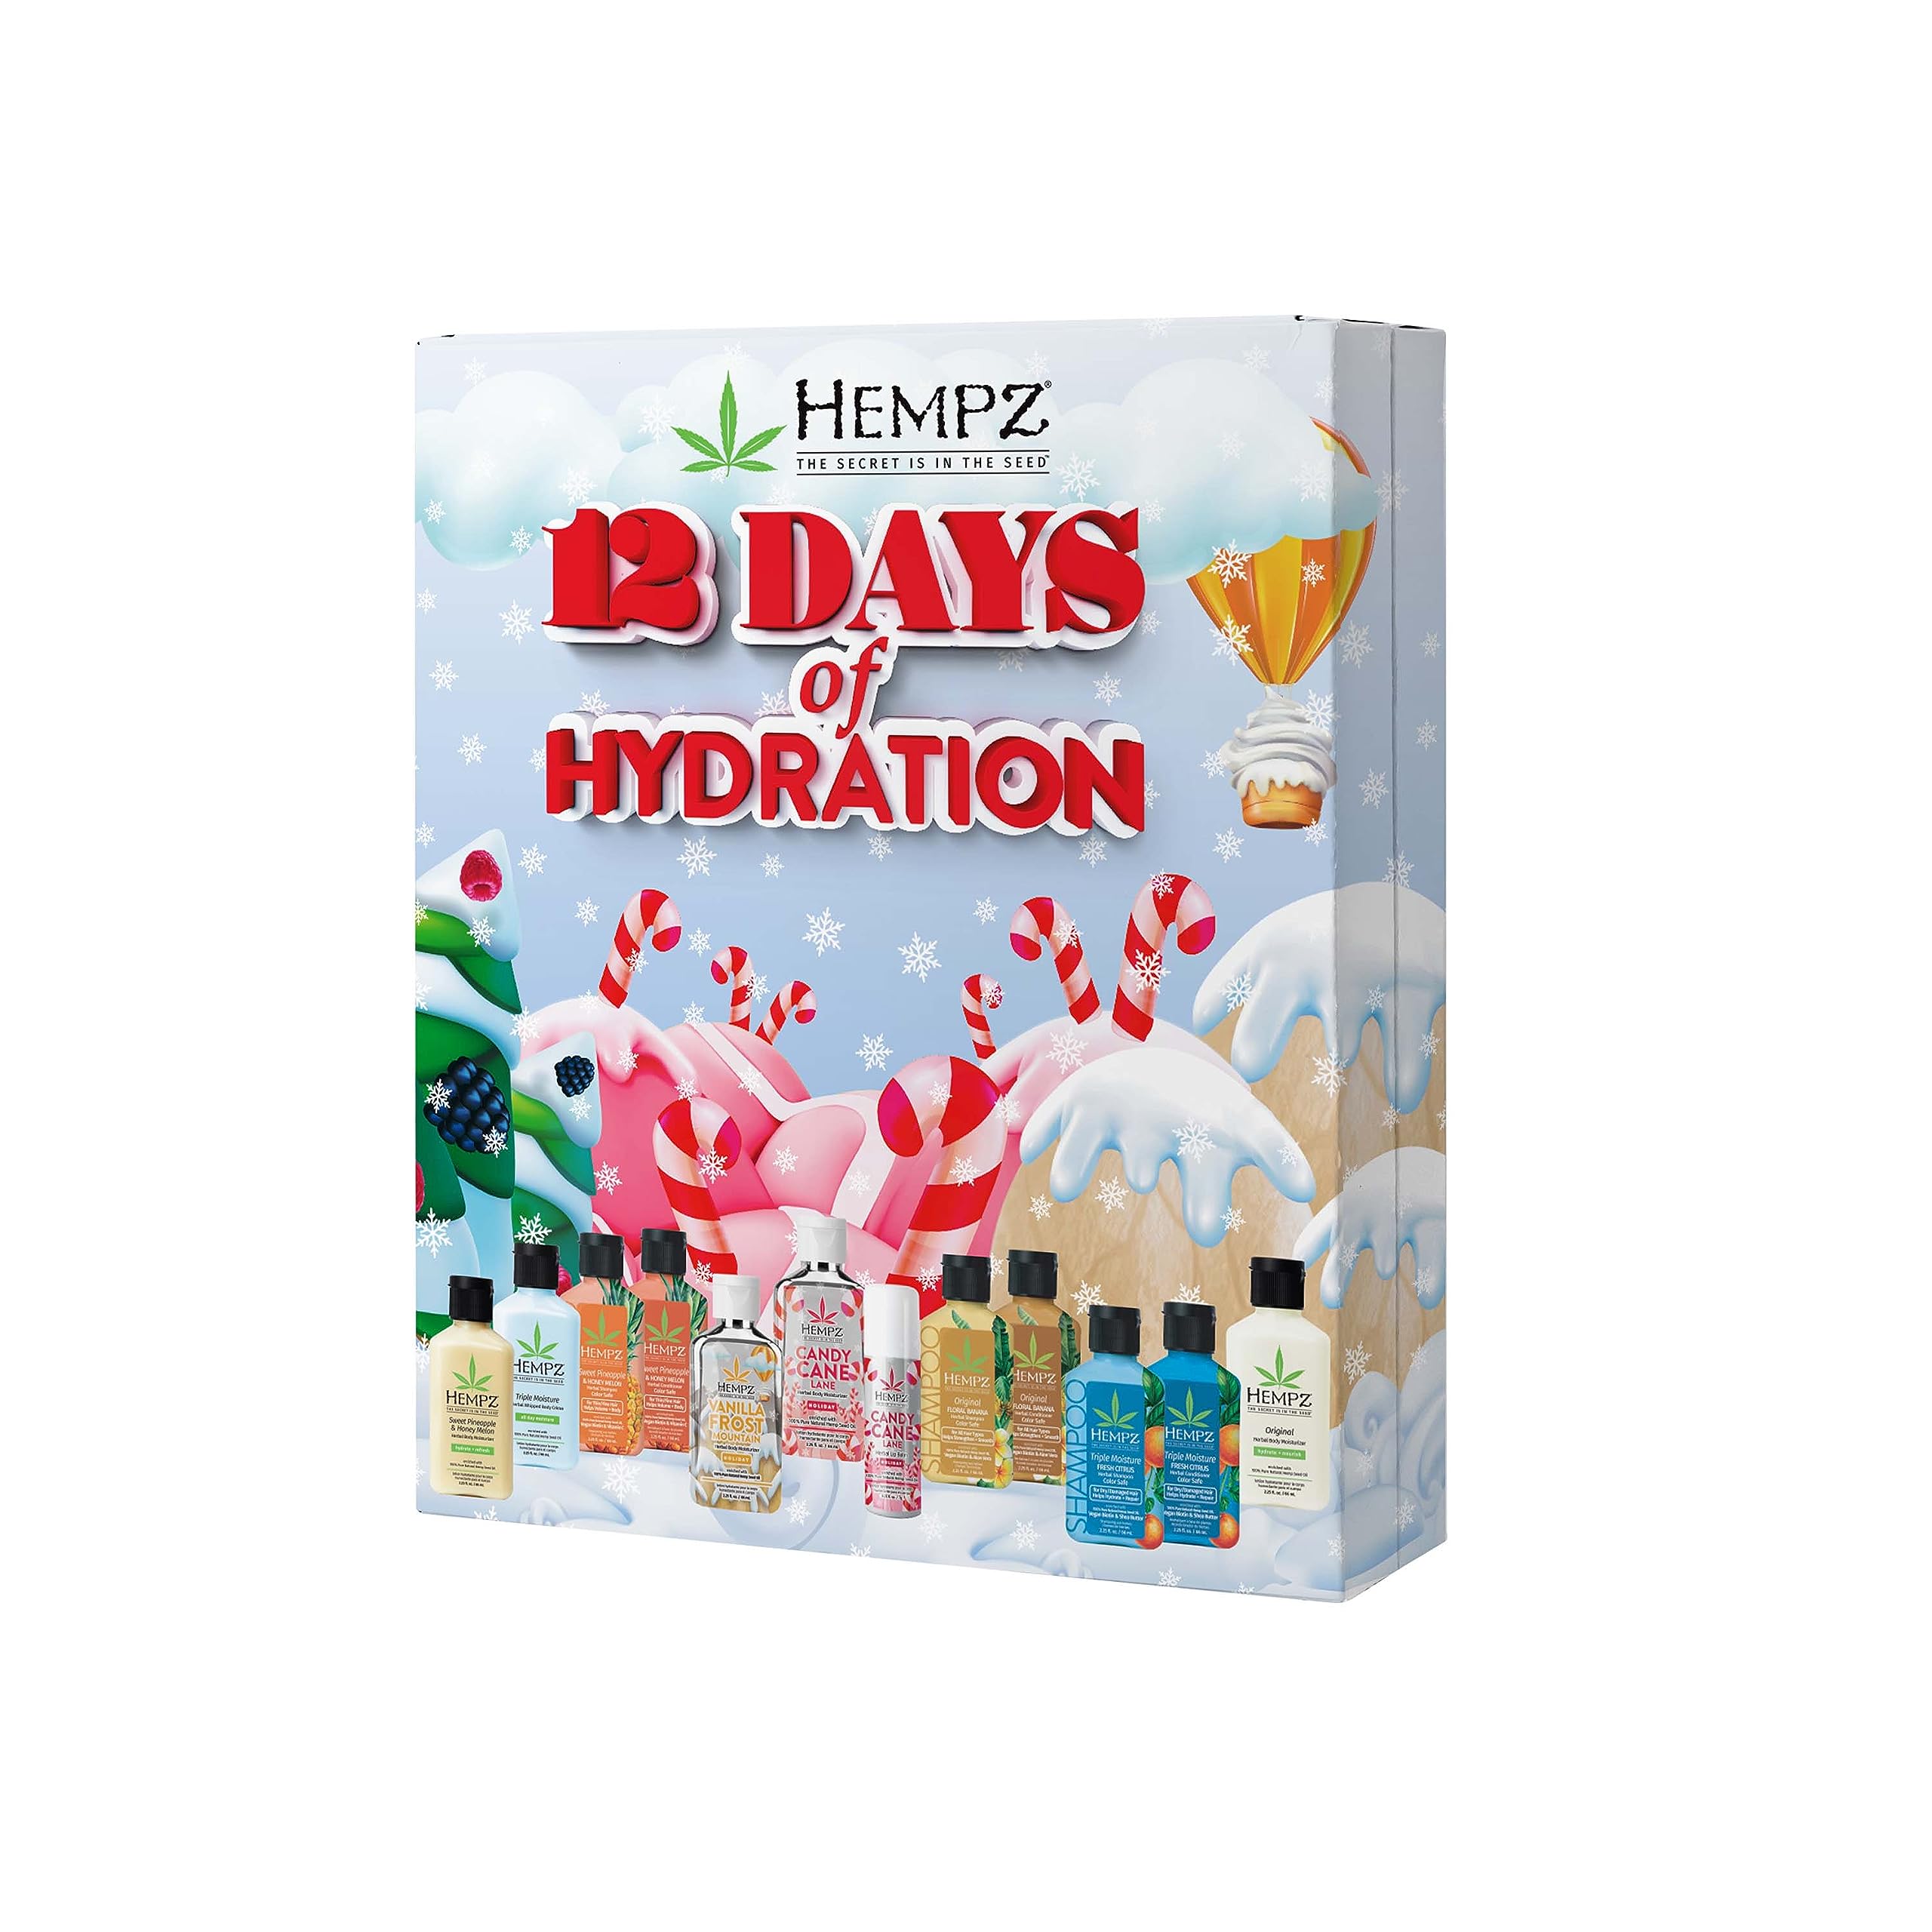 Hempz Twelve Days of Hydration Skin Care Gift Set (12-pack) - Candy Cane Moisturizer & Lip Balm, Vanilla Moisturizer, Pineapple & Melon, Original, & Triple Moisture $32.2